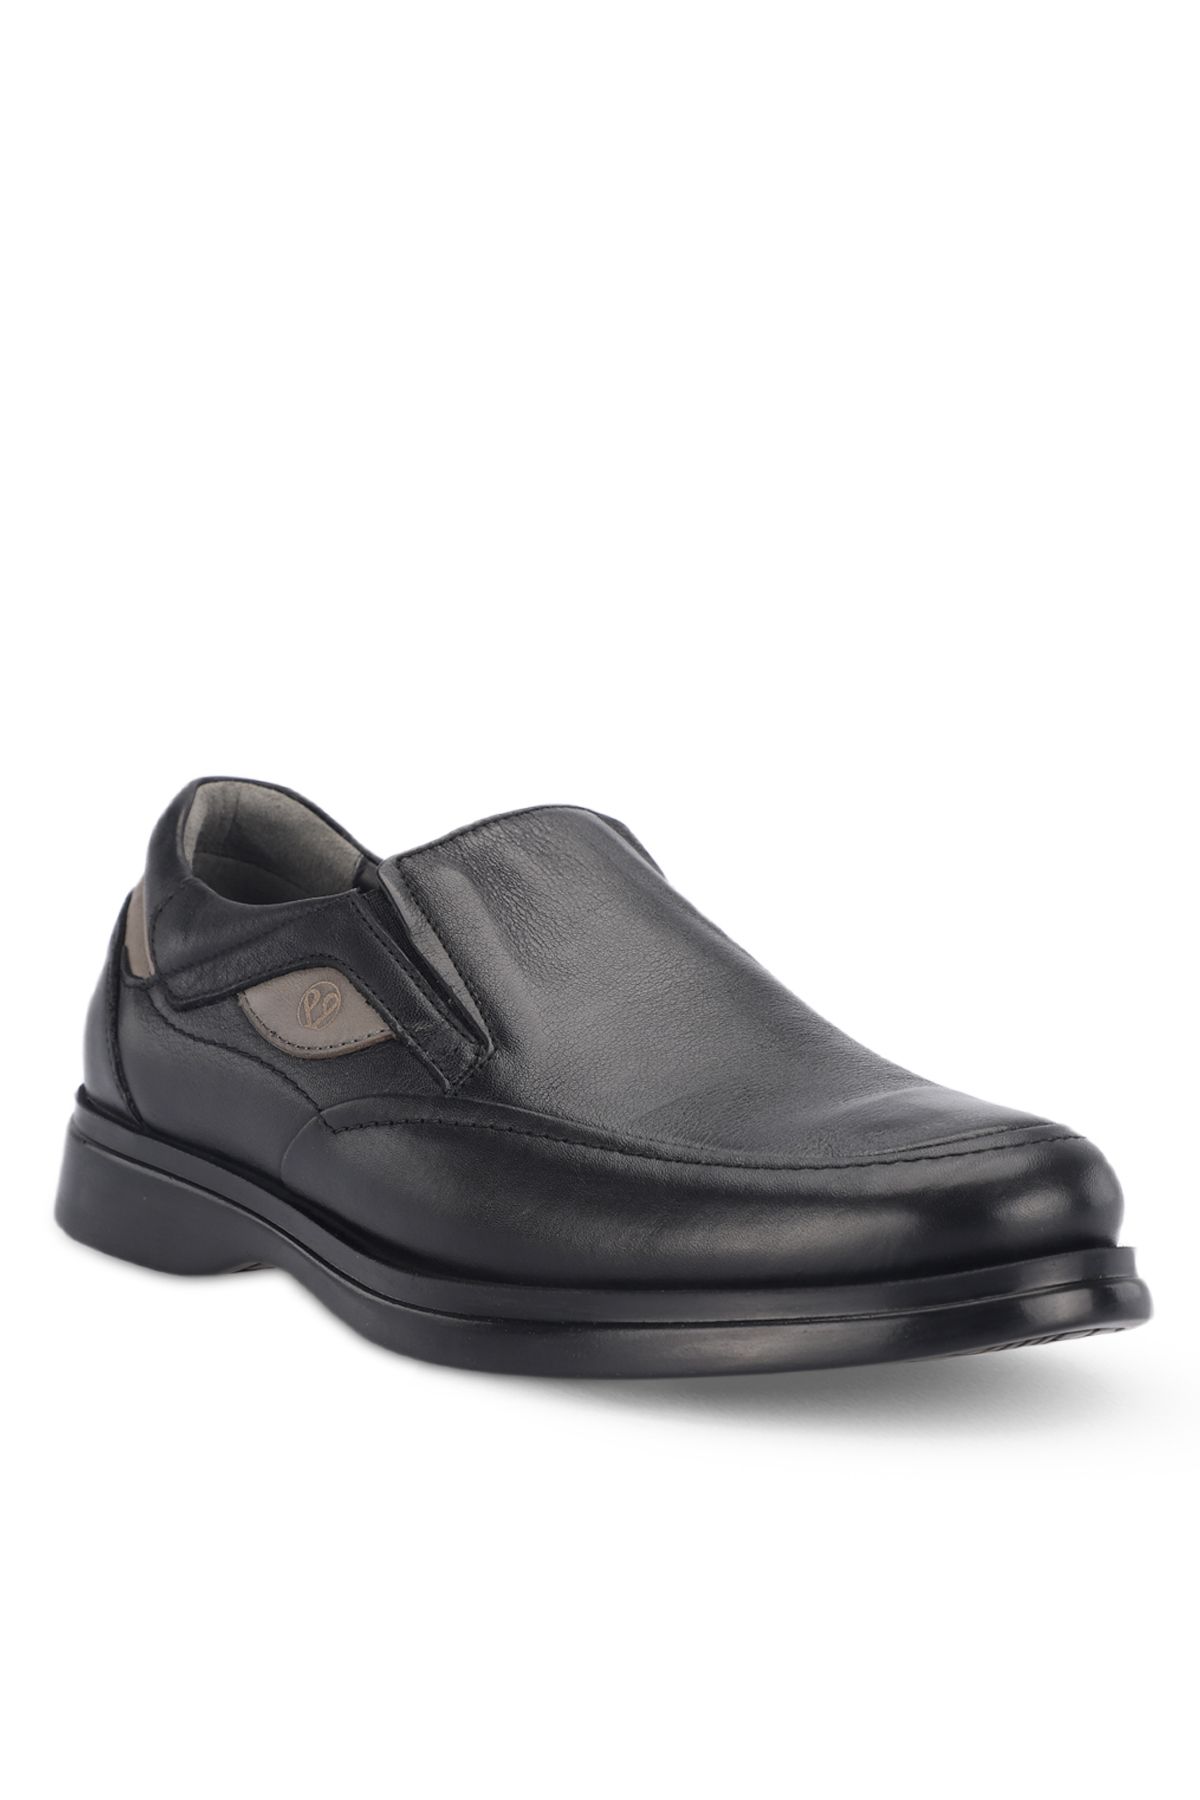 Forelli NARDO-H Comfort Erkek Ayakkabı Siyah